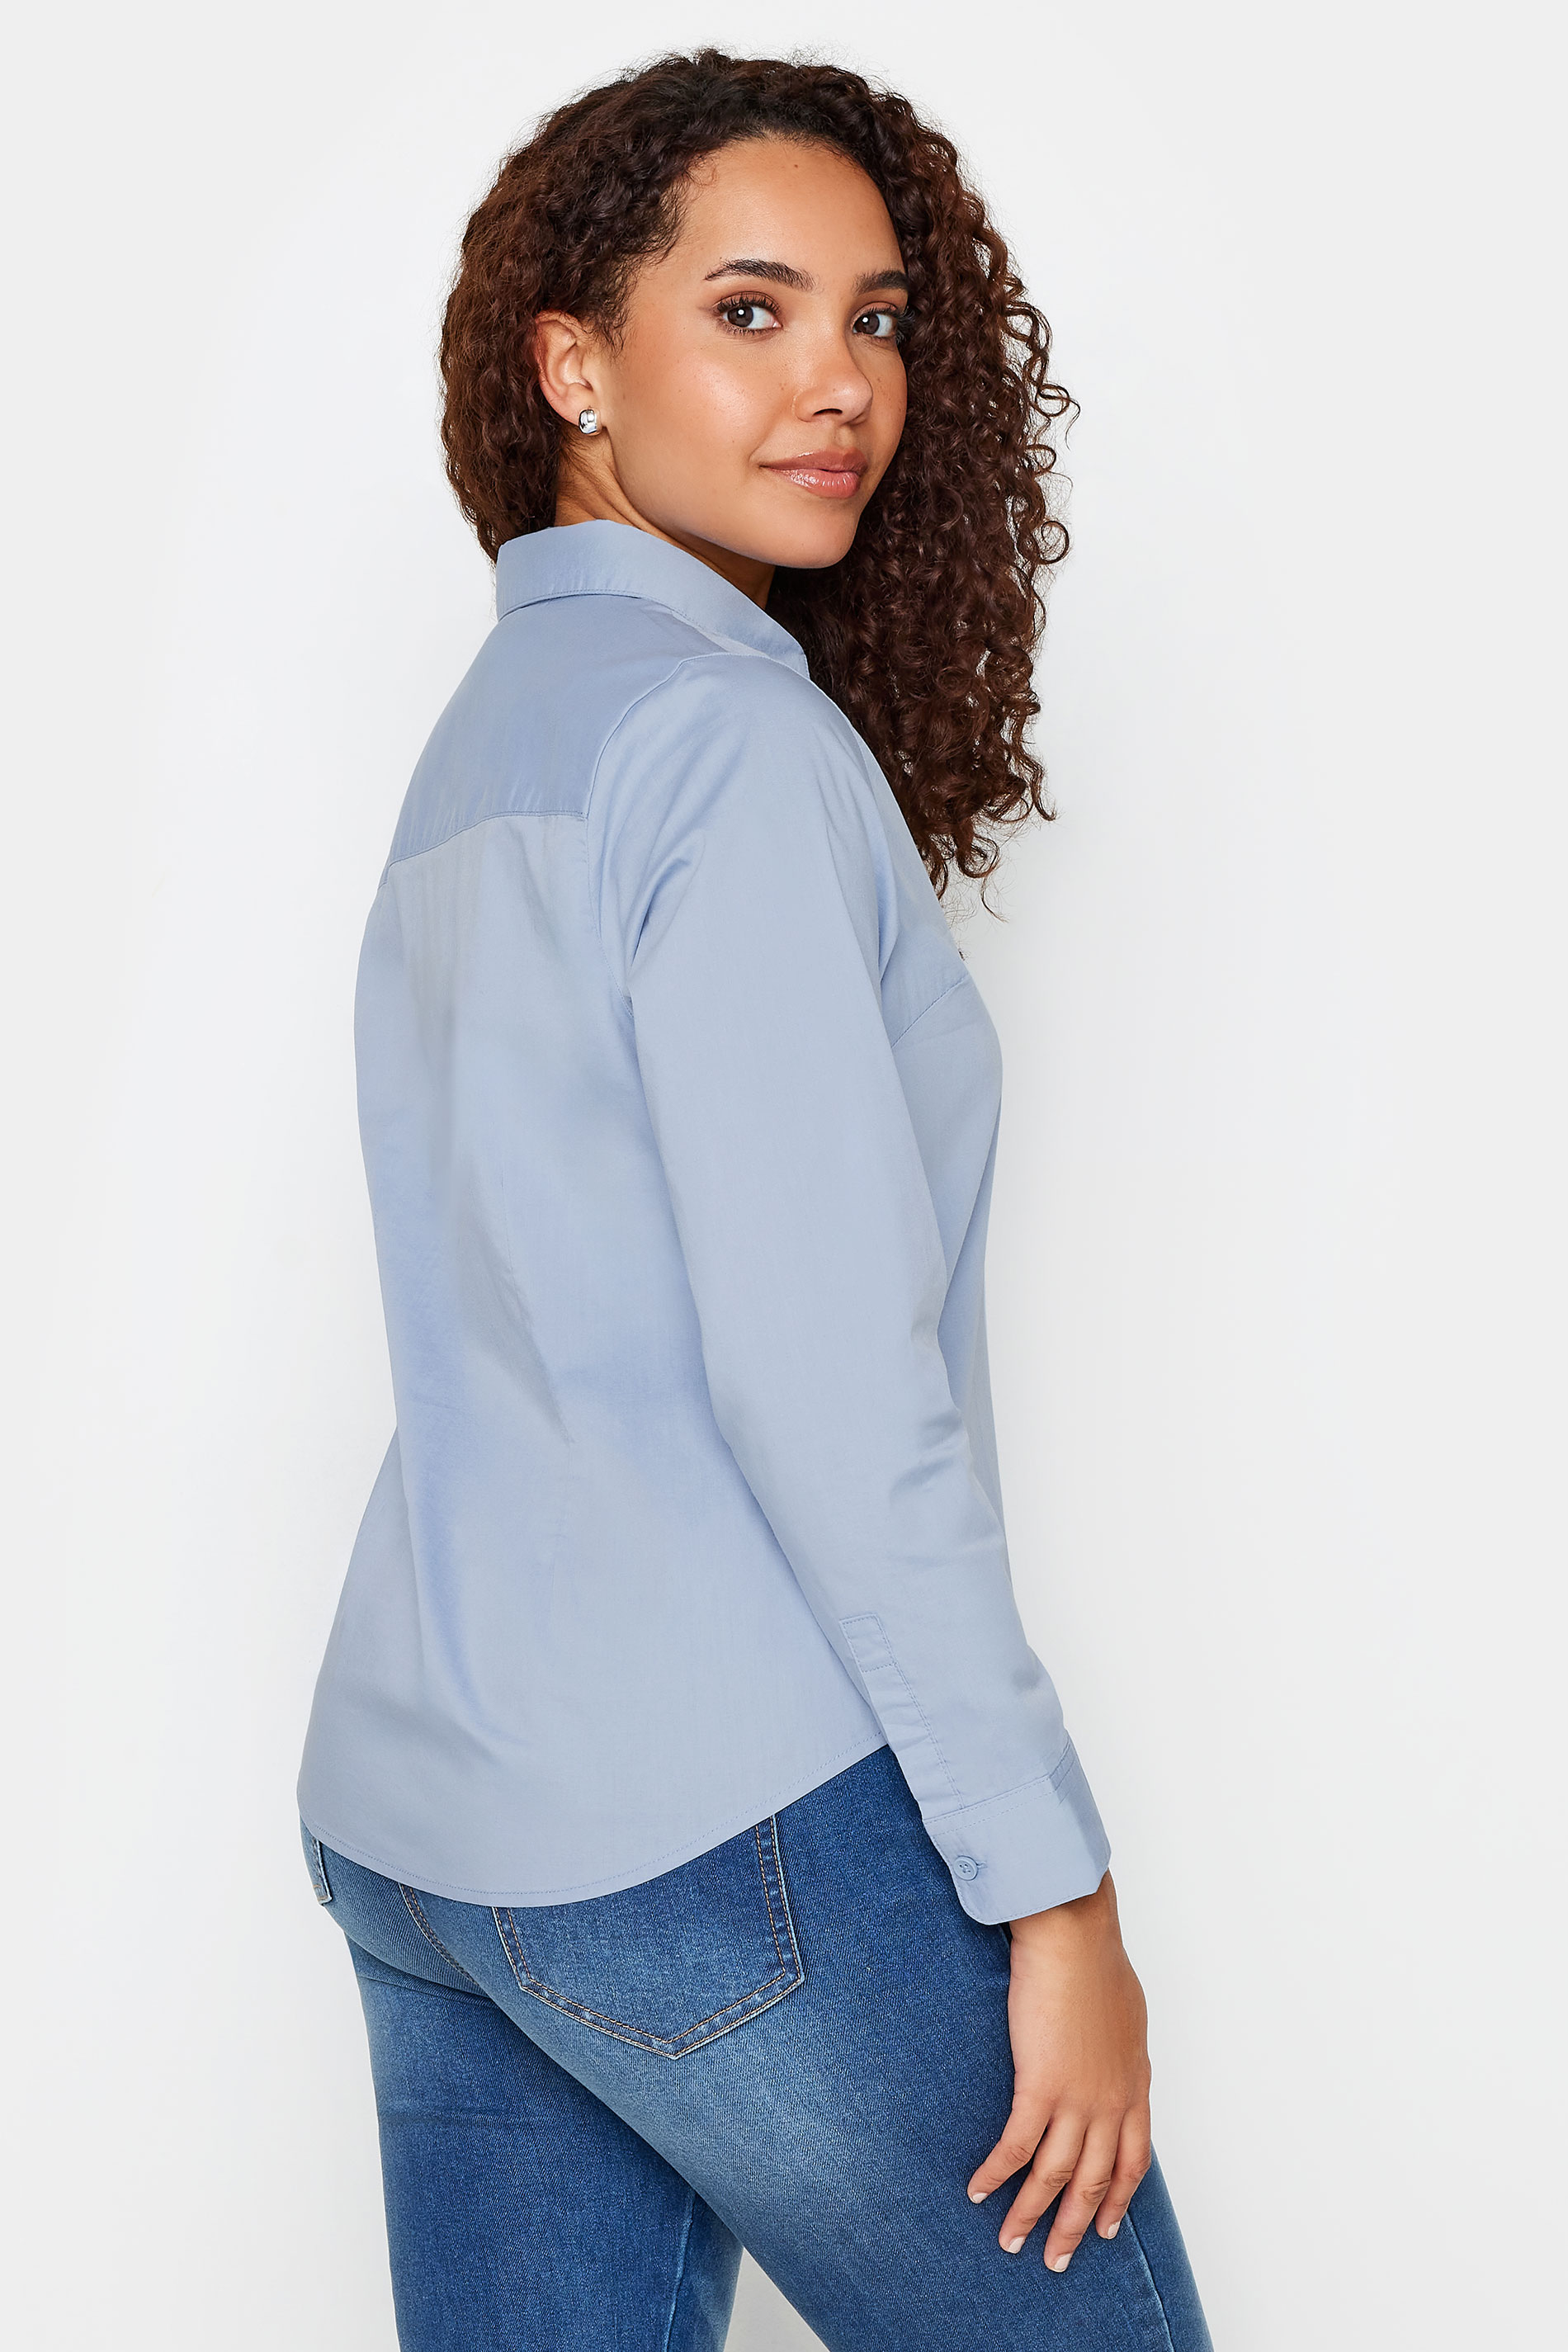 M&Co Blue Cotton Poplin Long Sleeve Shirt | M&Co 3